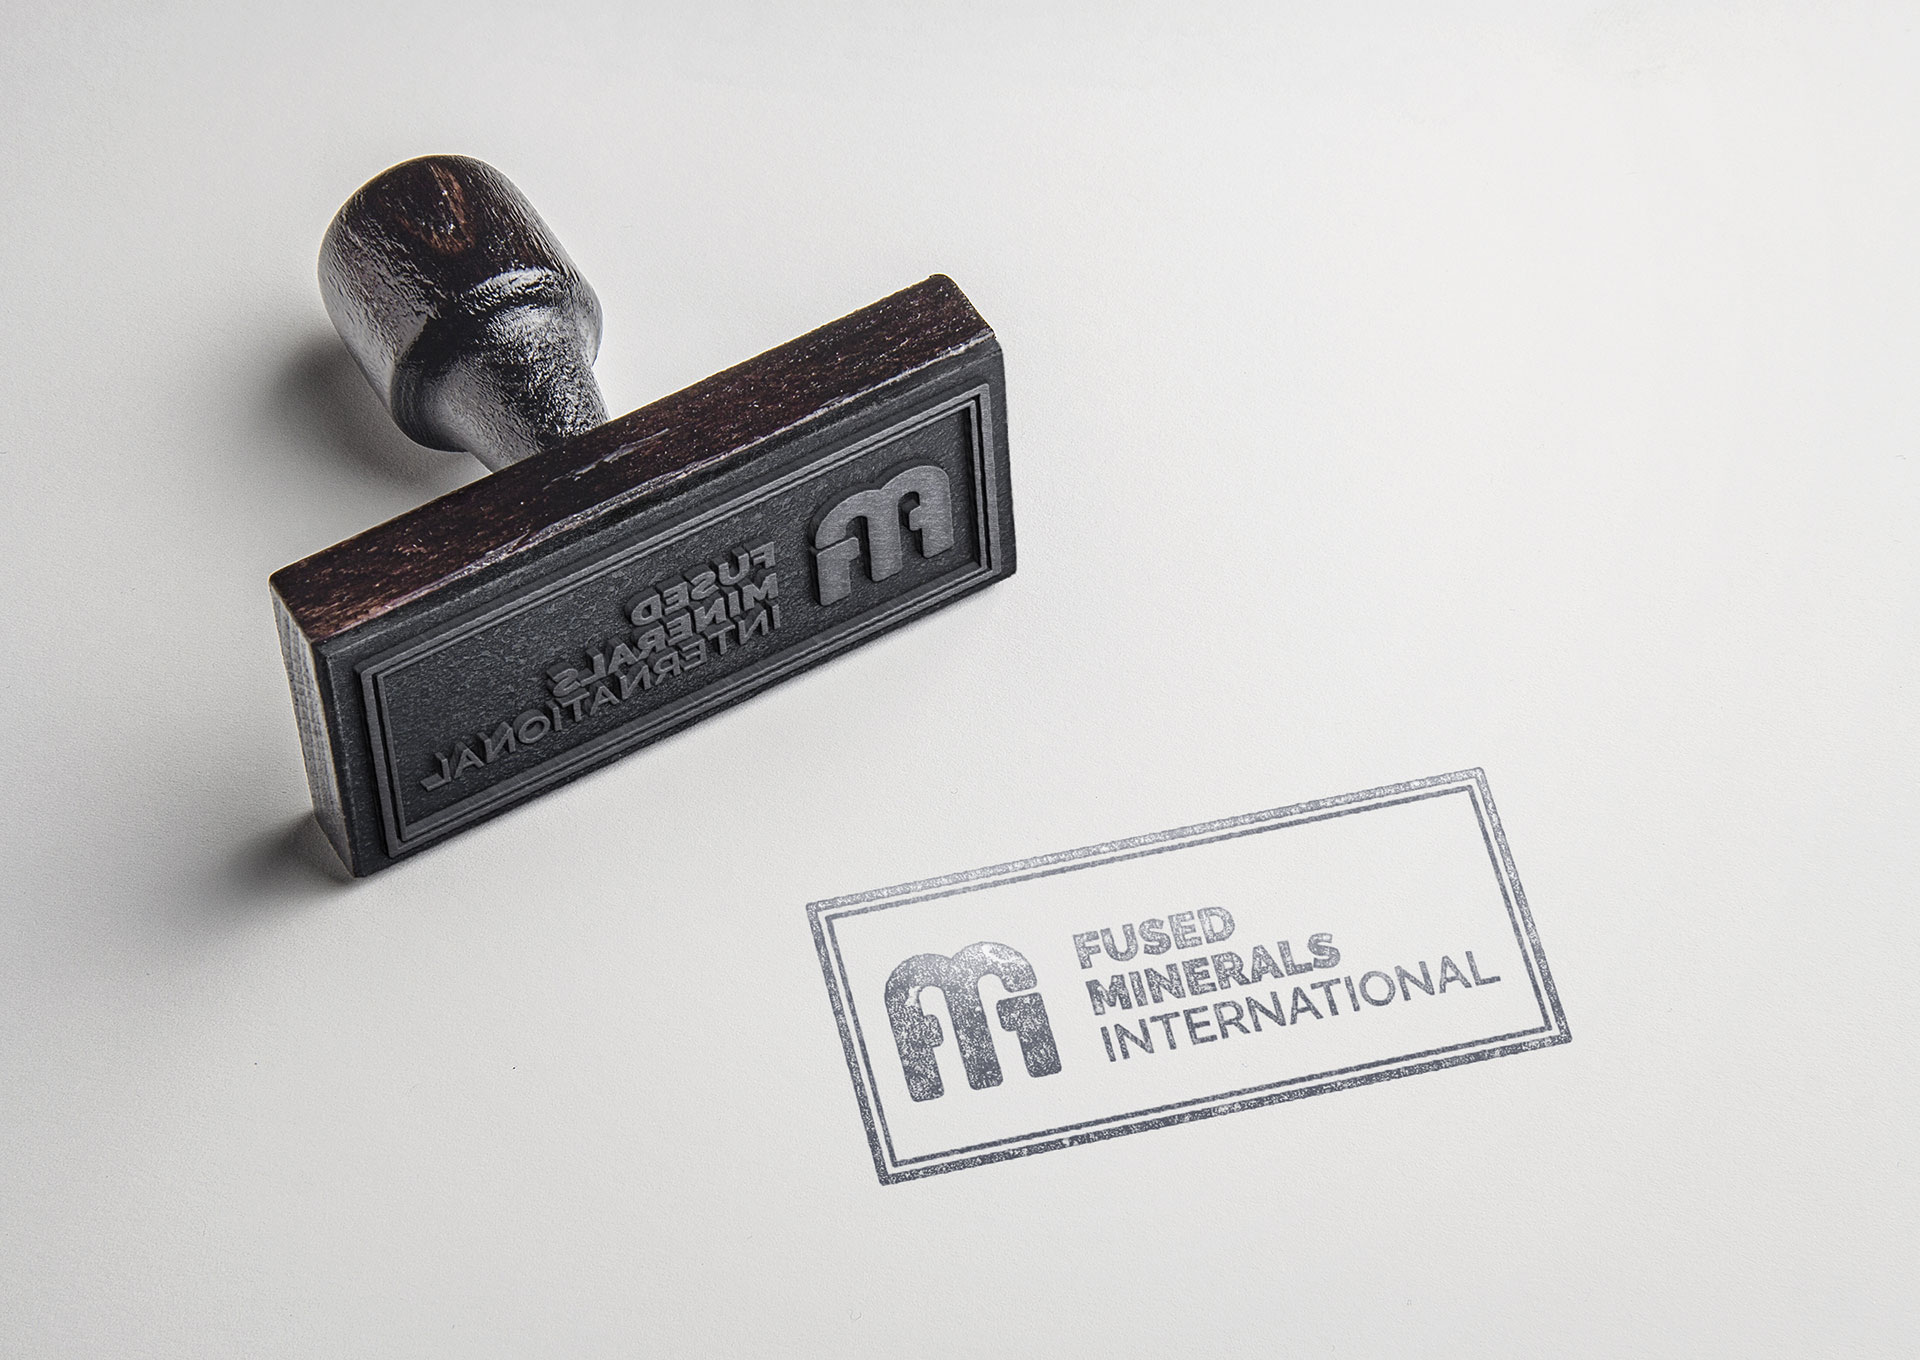 Branding Seal of Fused Minerals International (FMI)